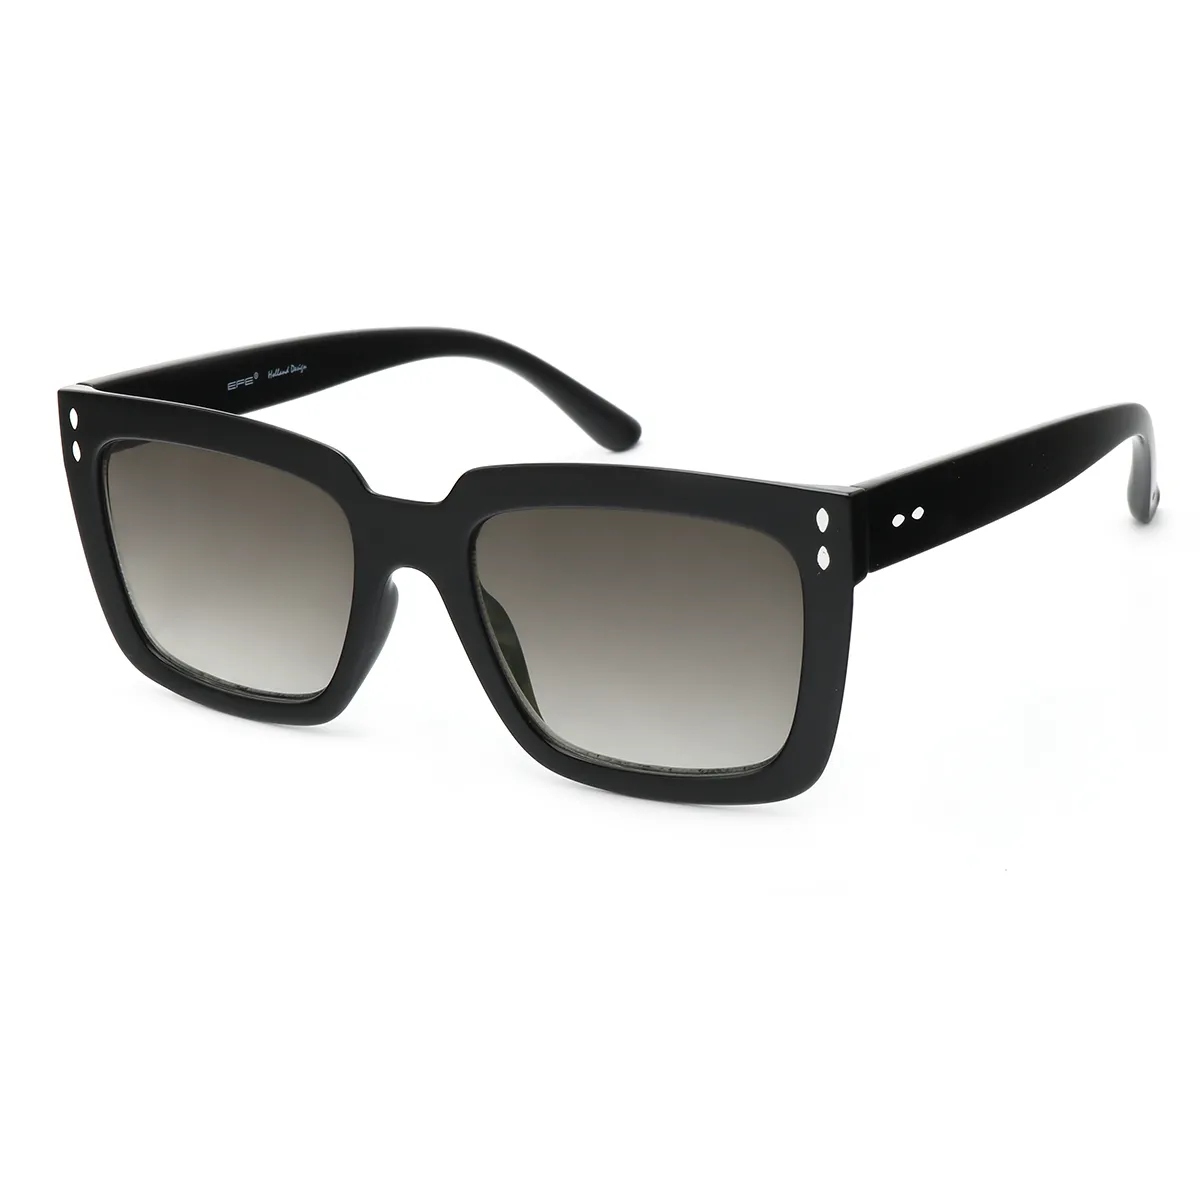 Way Square Black Sunglasses for Women & Men